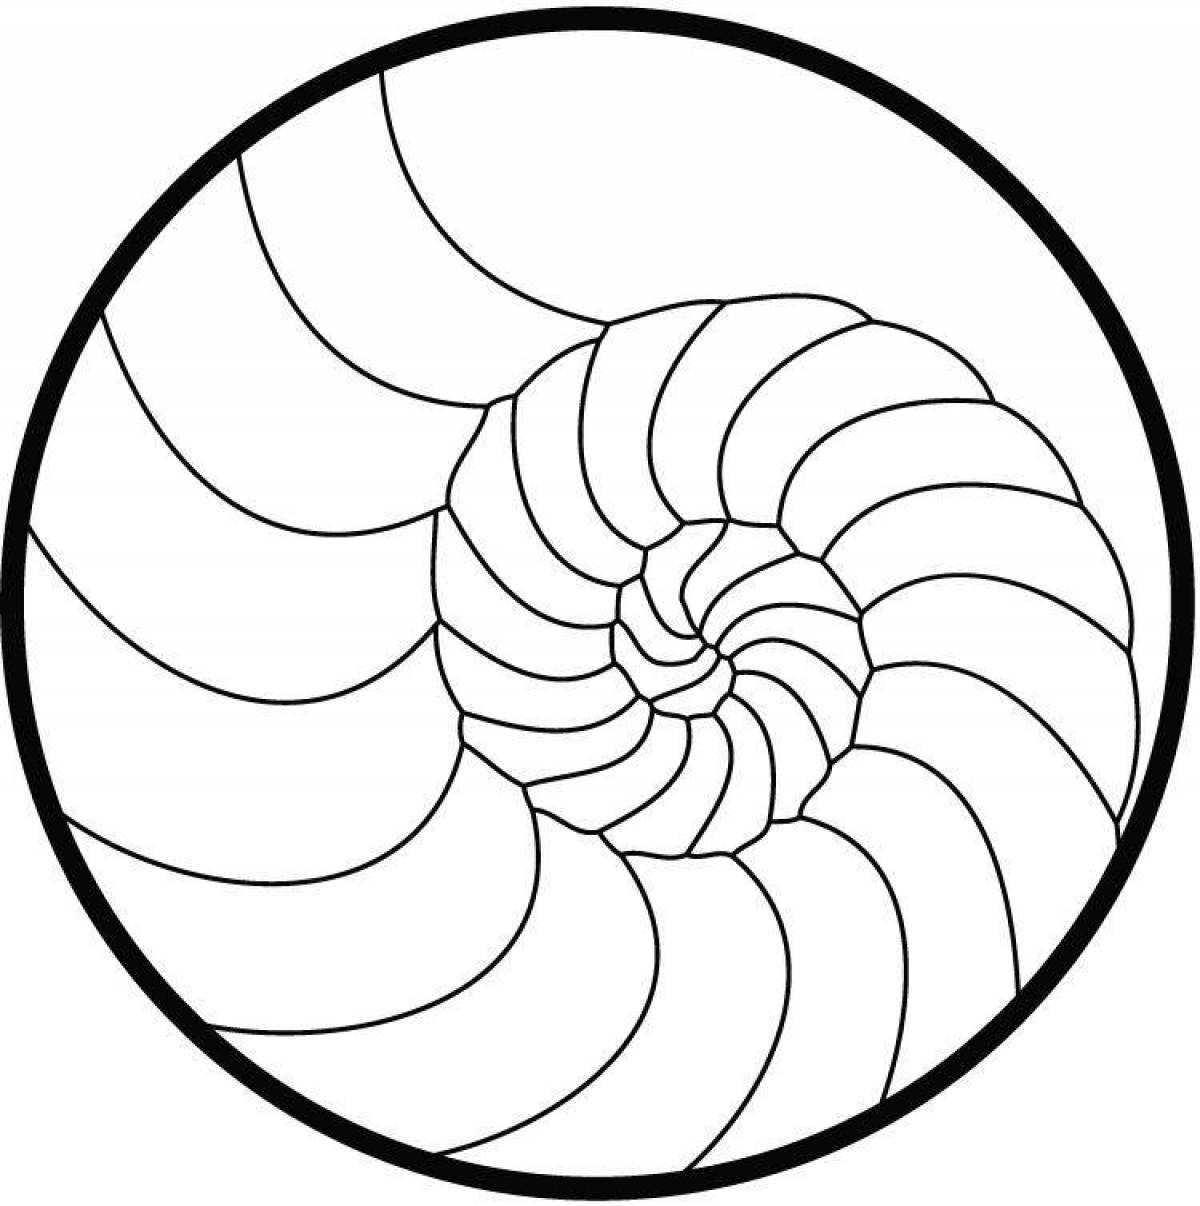 Adorable spiral in a circle coloring book